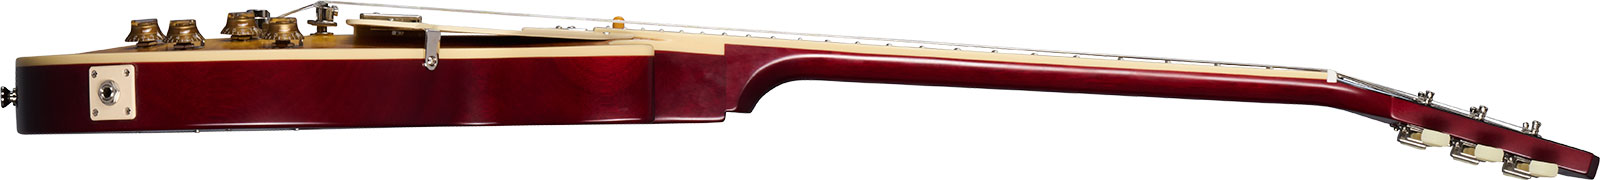 Epiphone 1959 Les Paul Standard Inspired By 2h Gibson Ht Lau - Vos Iced Tea Burst - Guitare Électrique Single Cut - Variation 2